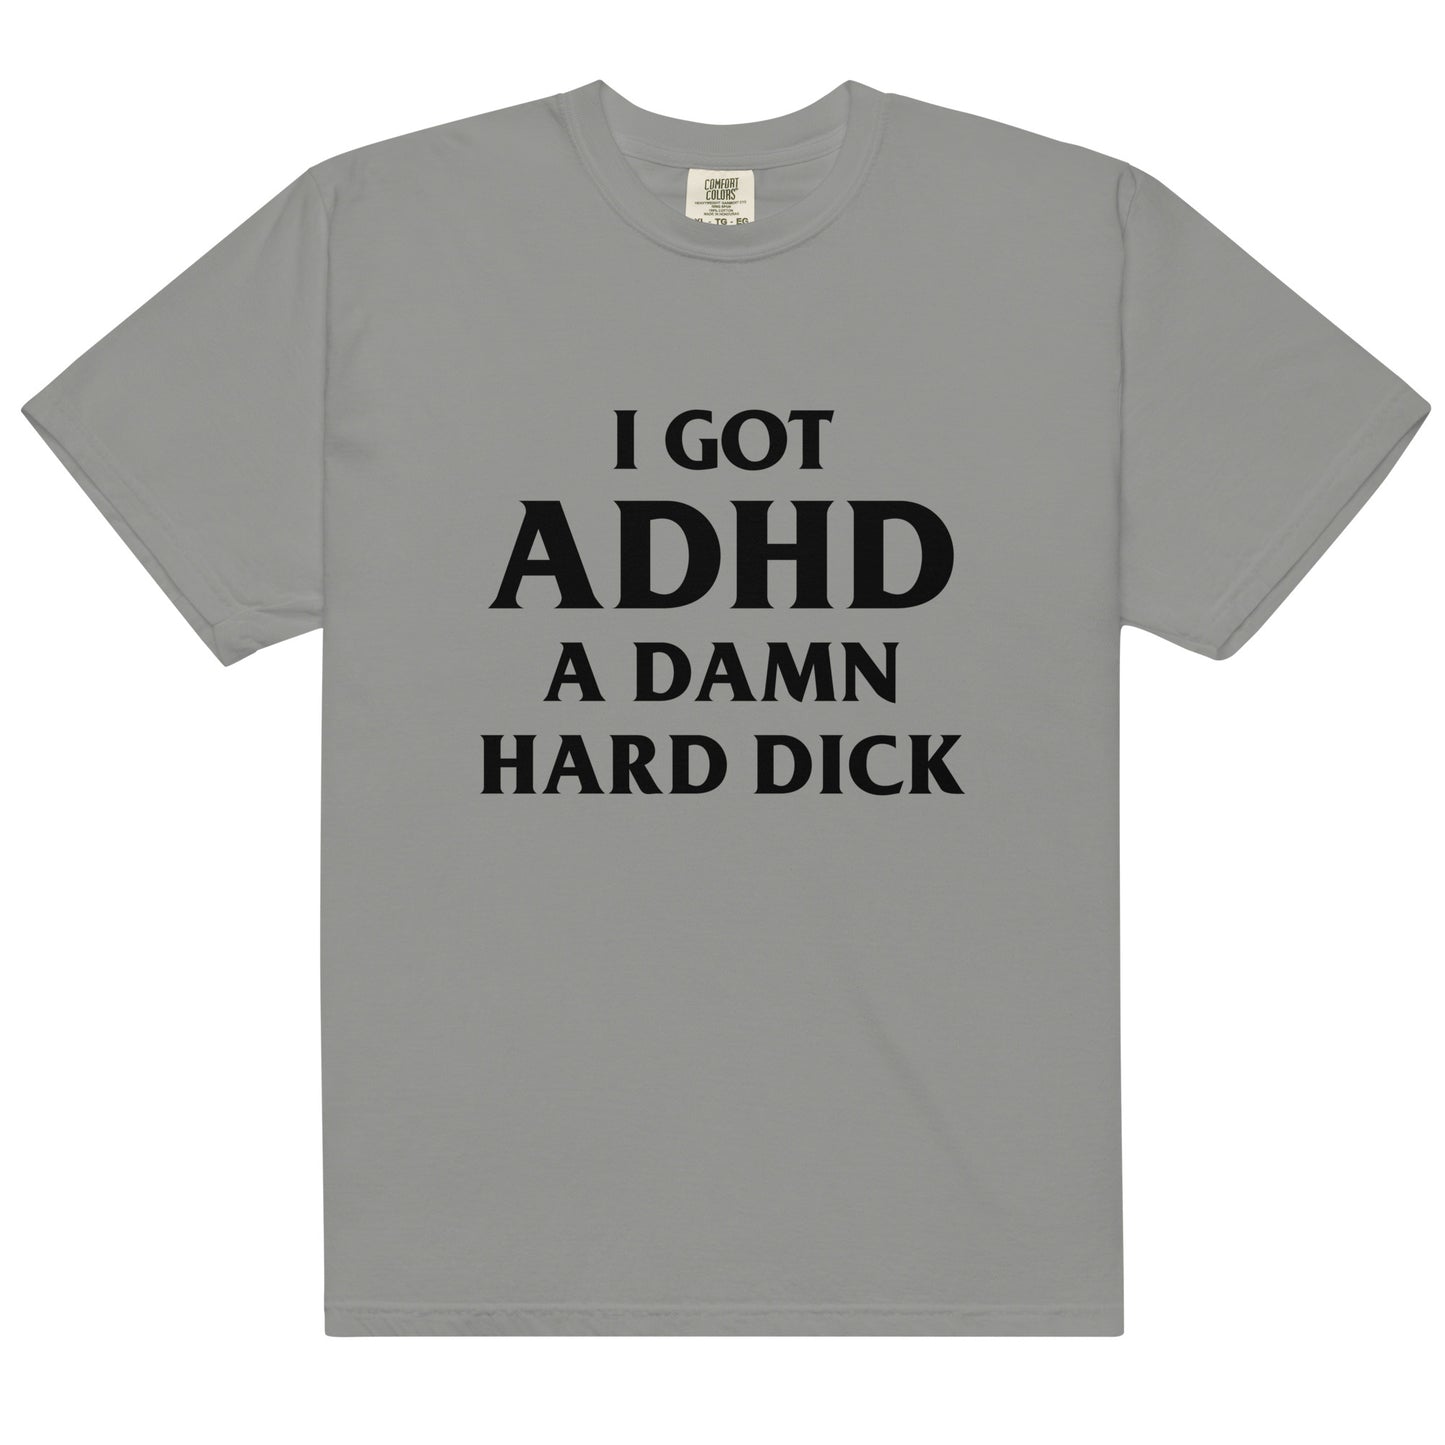 I Got ADHD (A Damn Hard Dick).